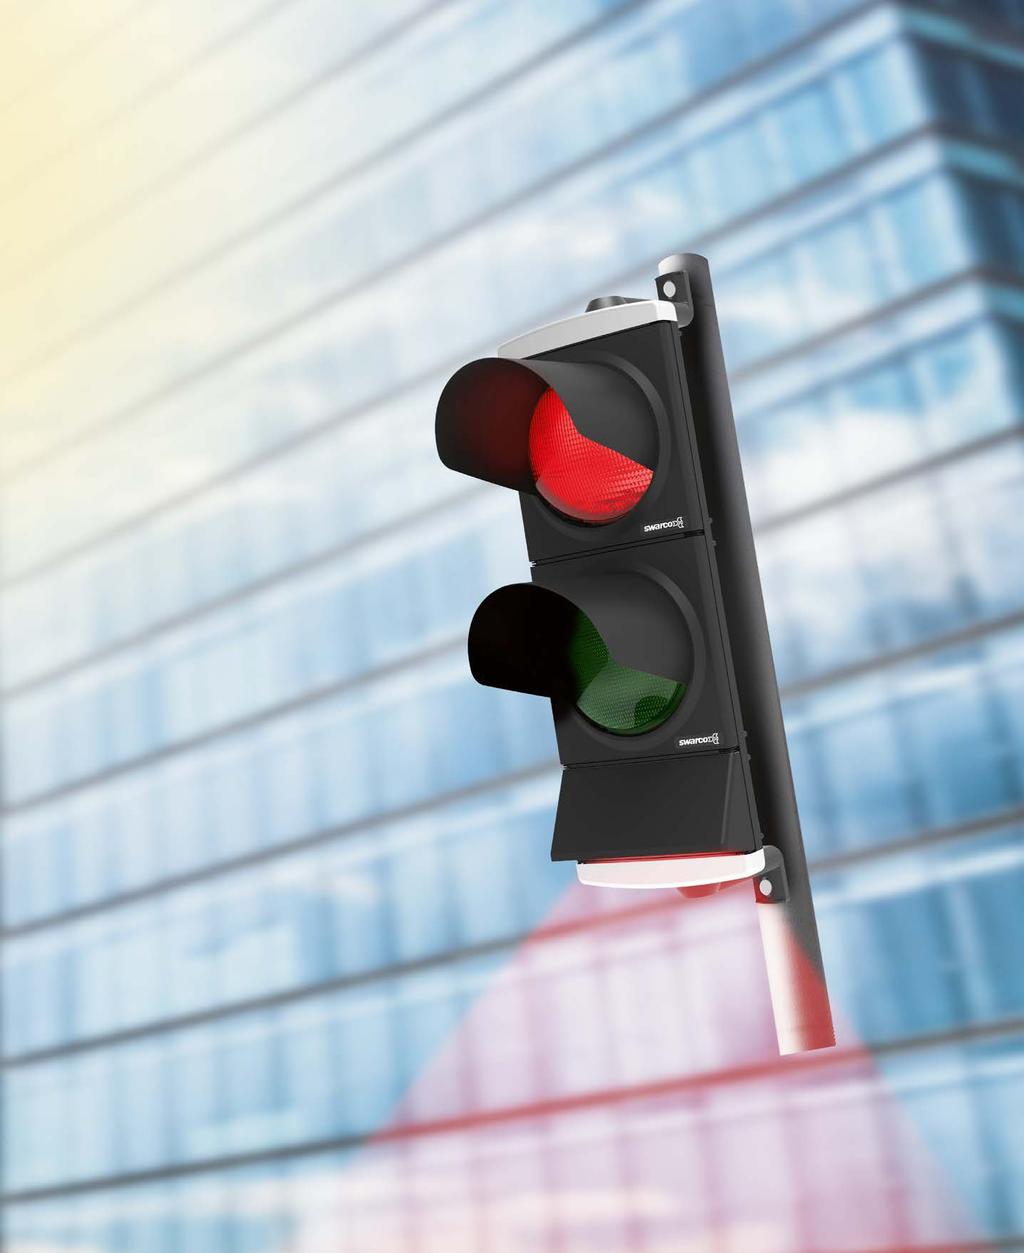 The traffic light of tomorrow.